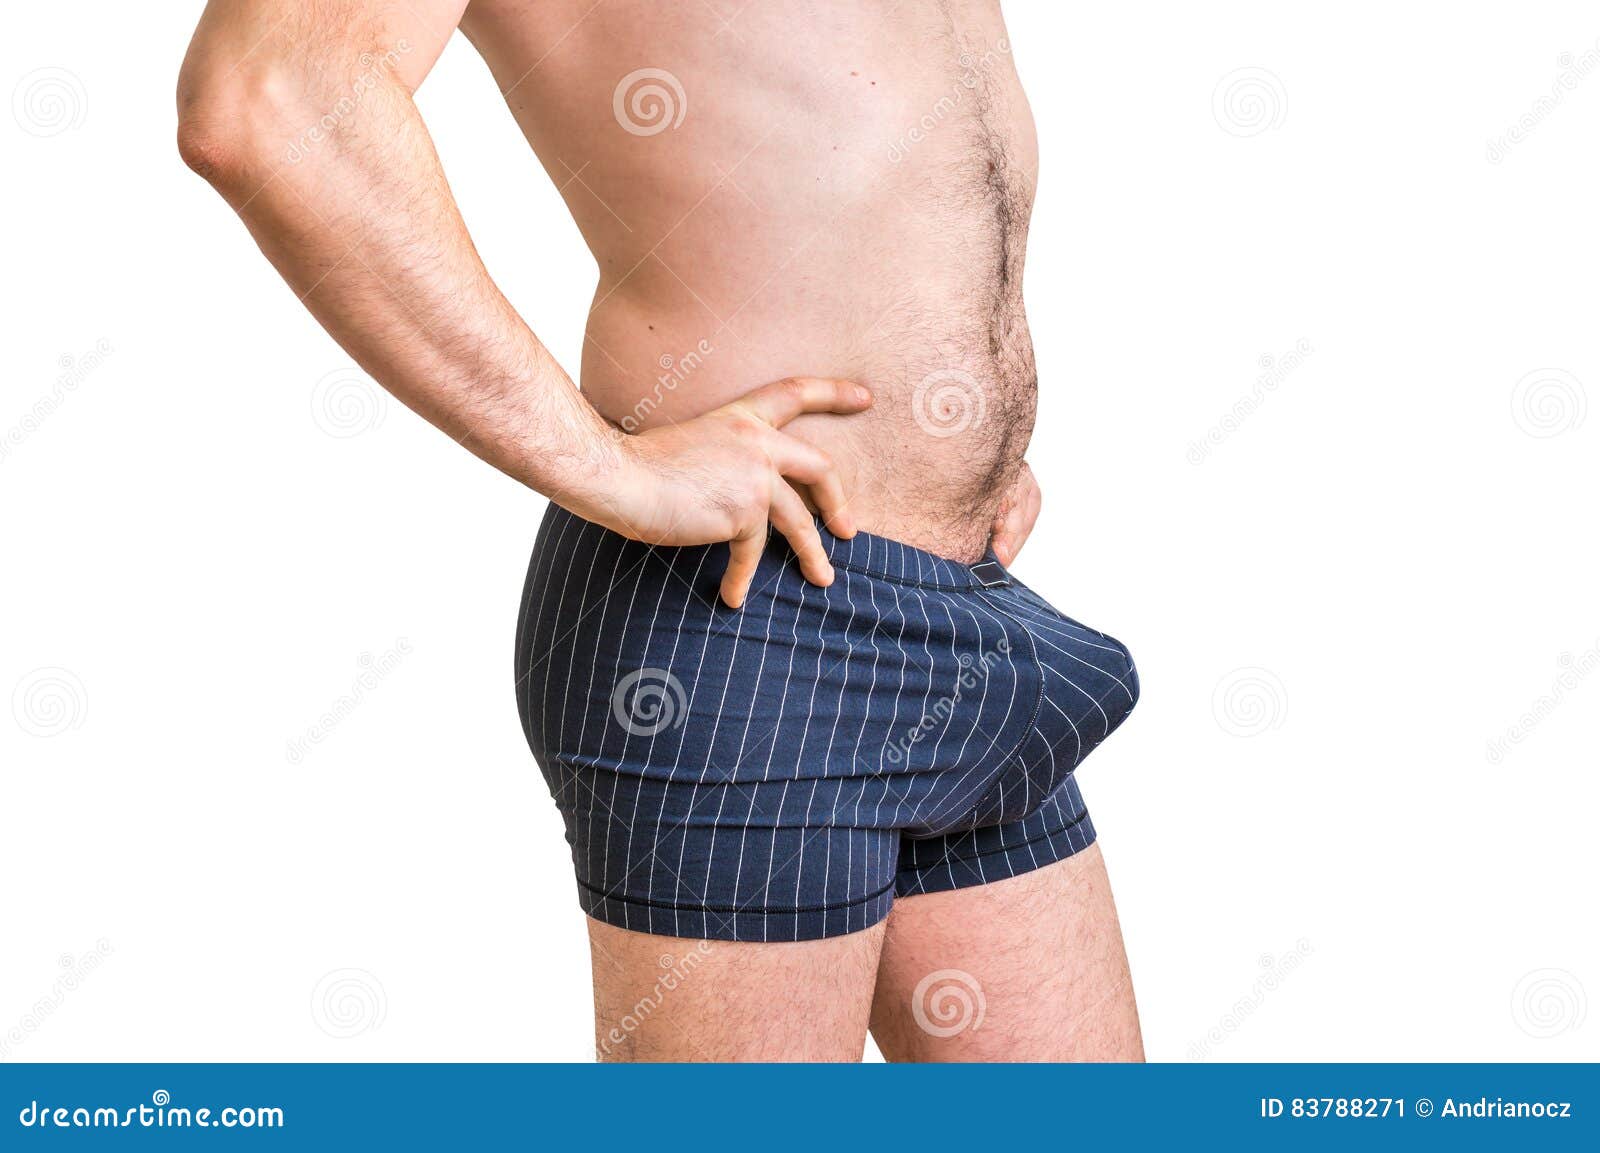 andrea scarlett add photo underwear for men with big dicks